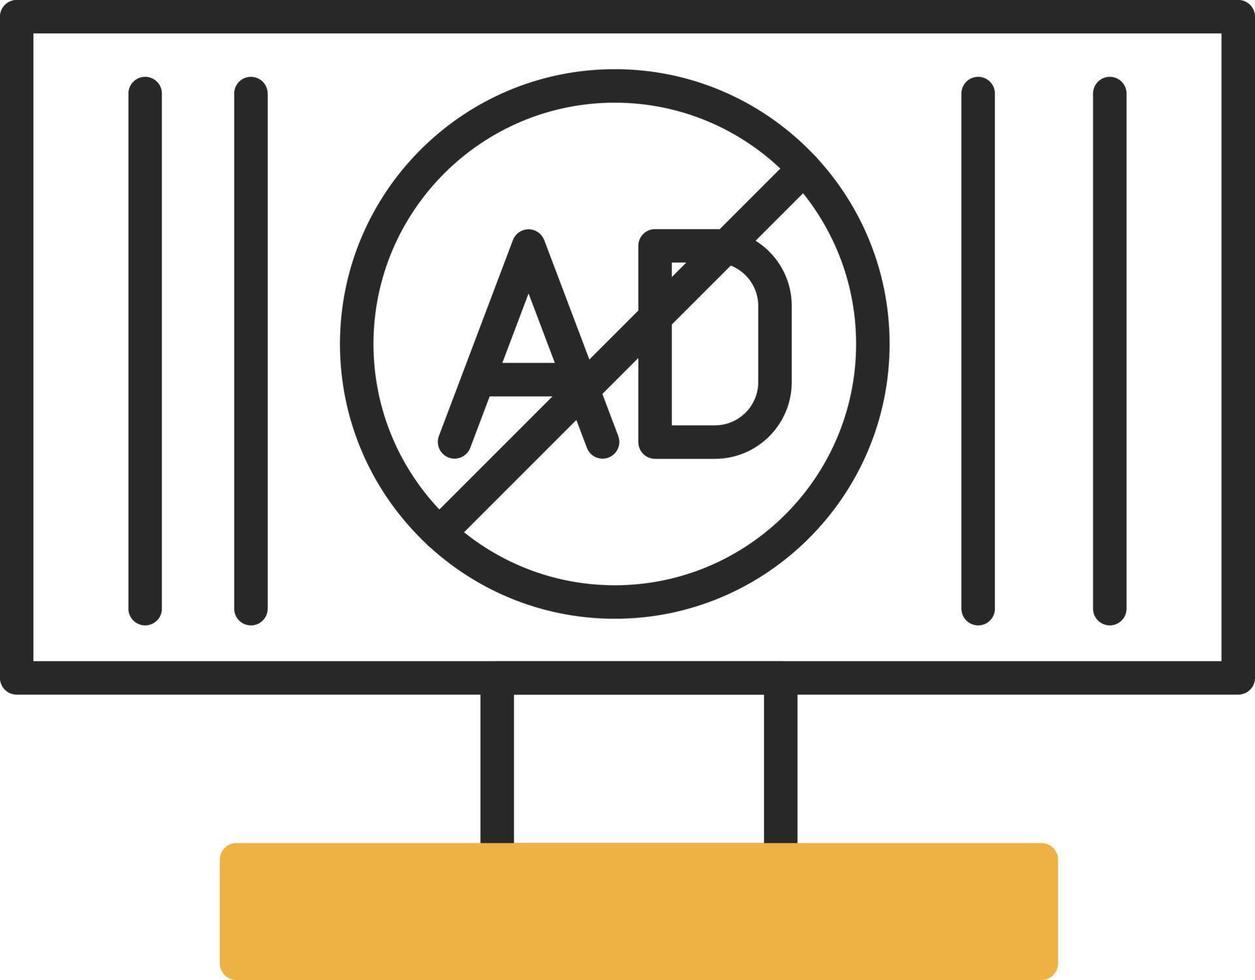 Ad Blocker Vector Icon Design